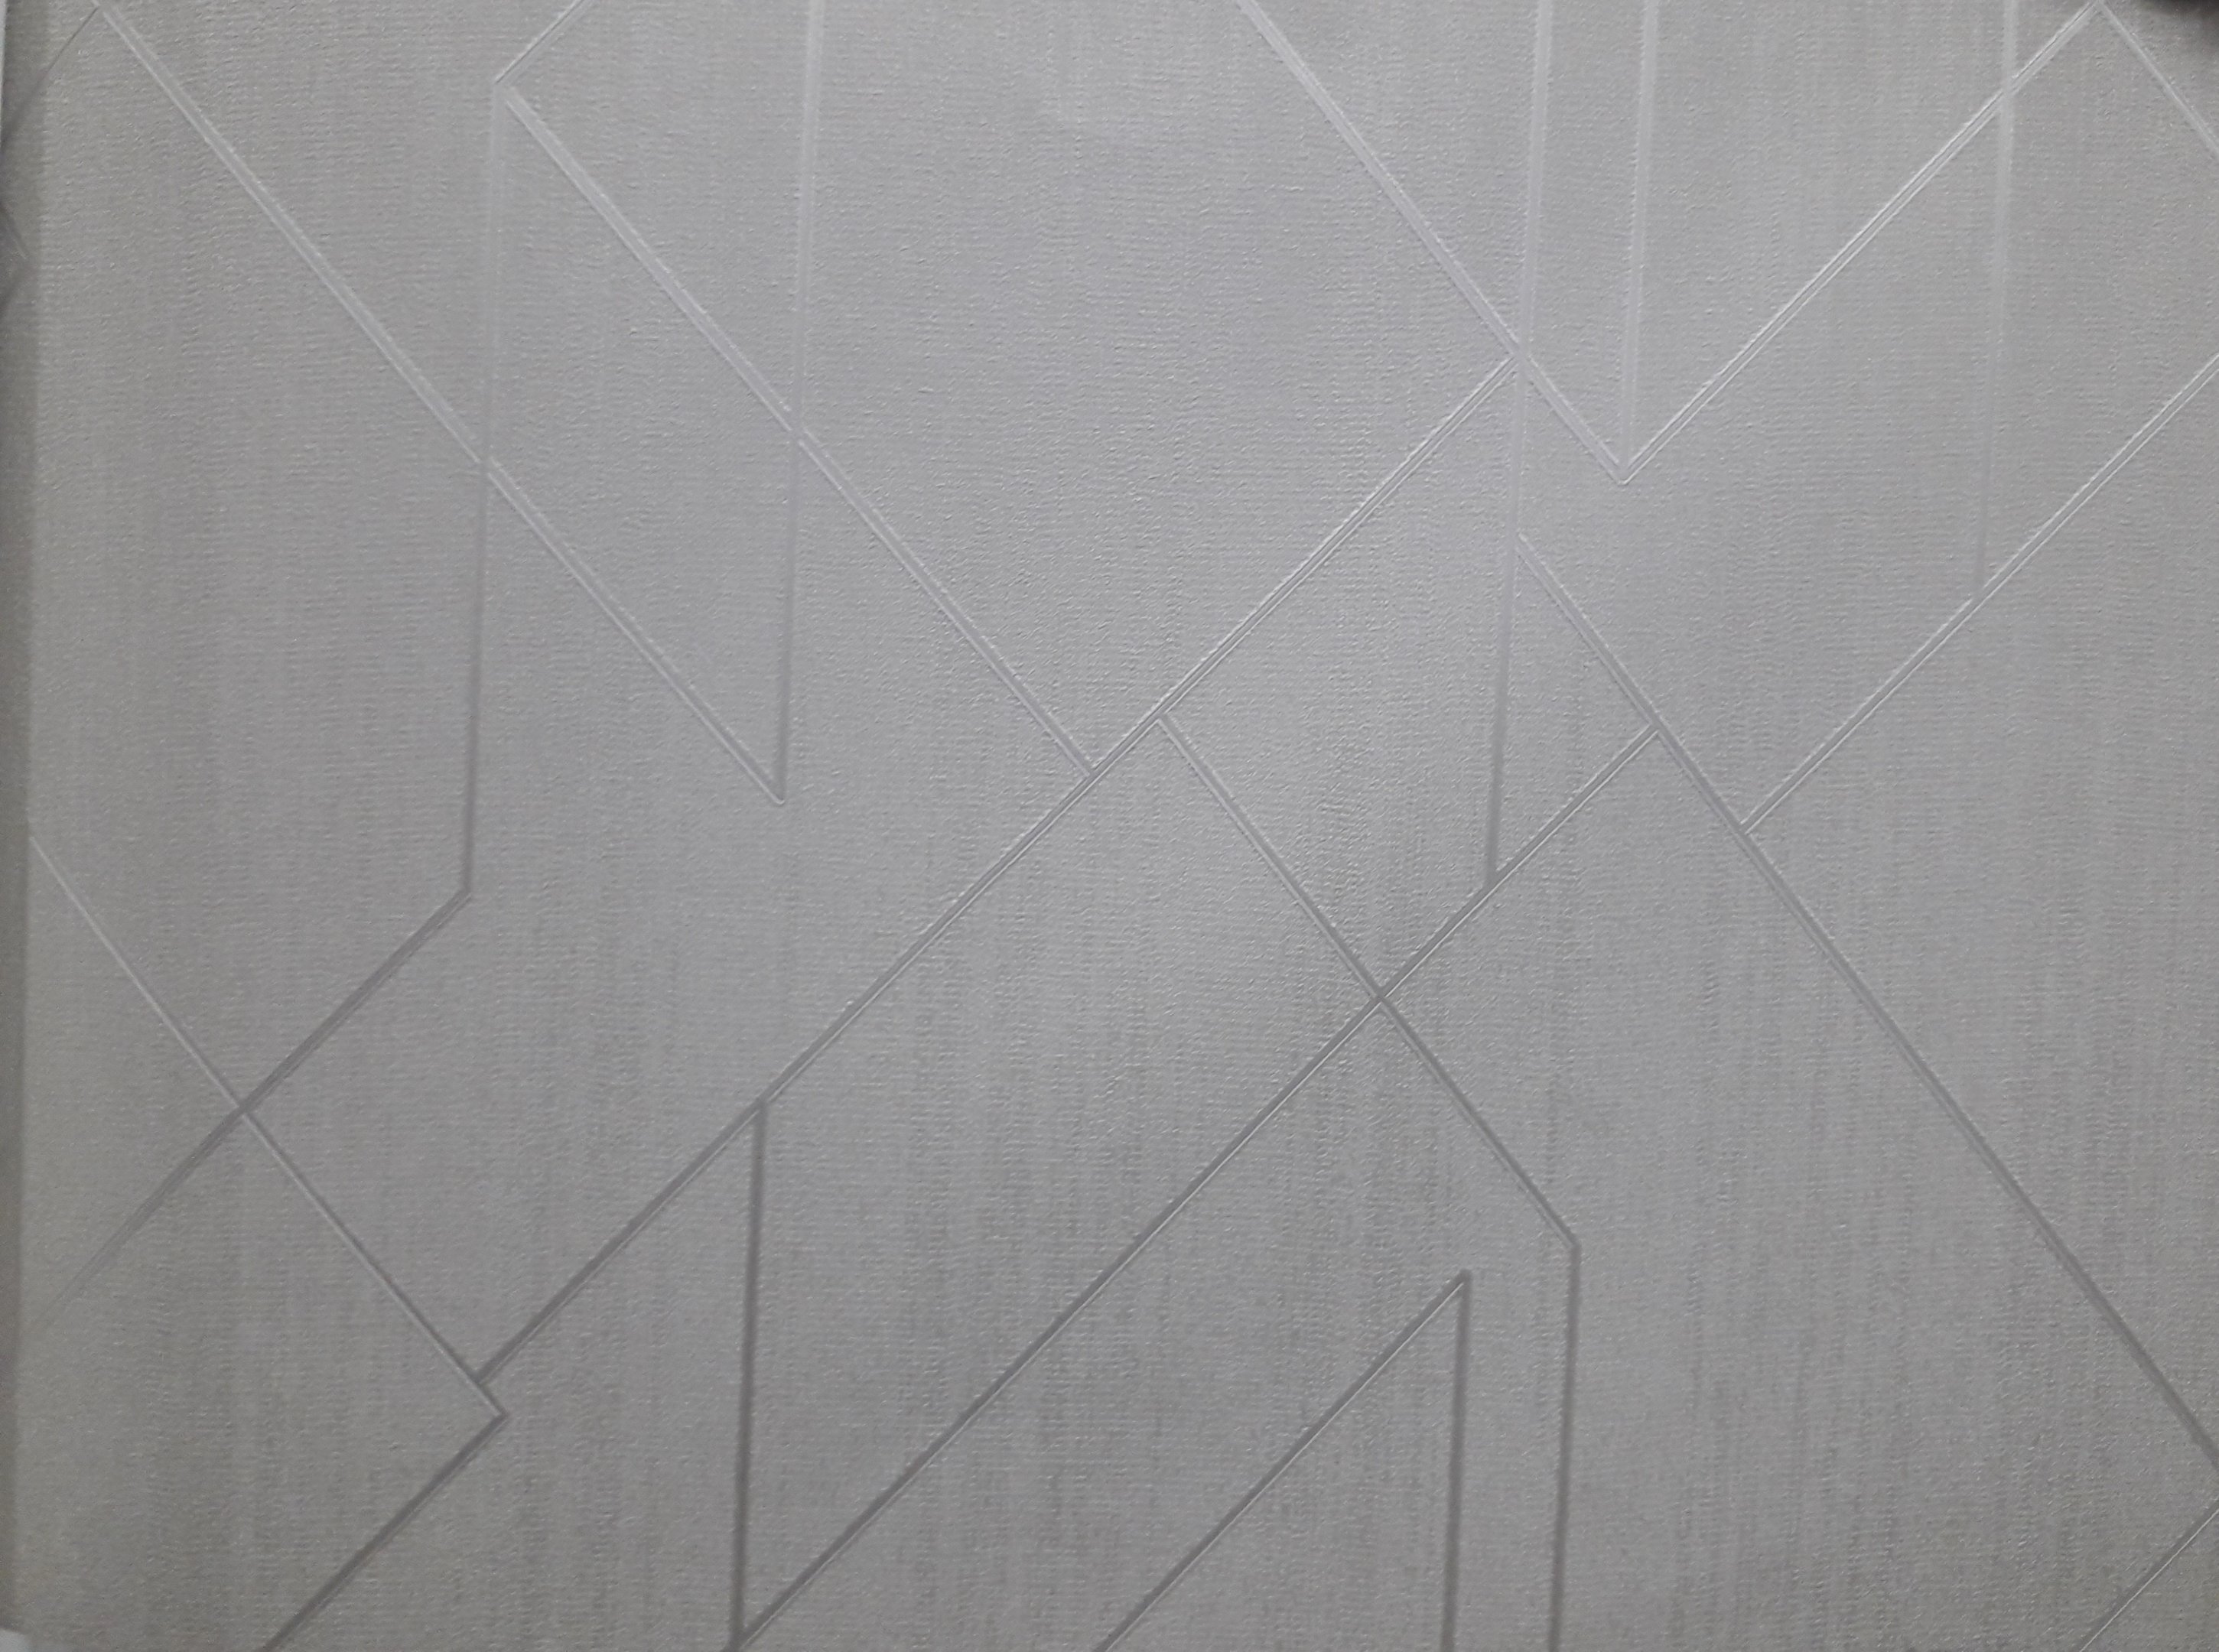 papel de parede vinilico - modelo geometrico cinza claro - vip 1043 - medida 0.53 x 10.0 metros